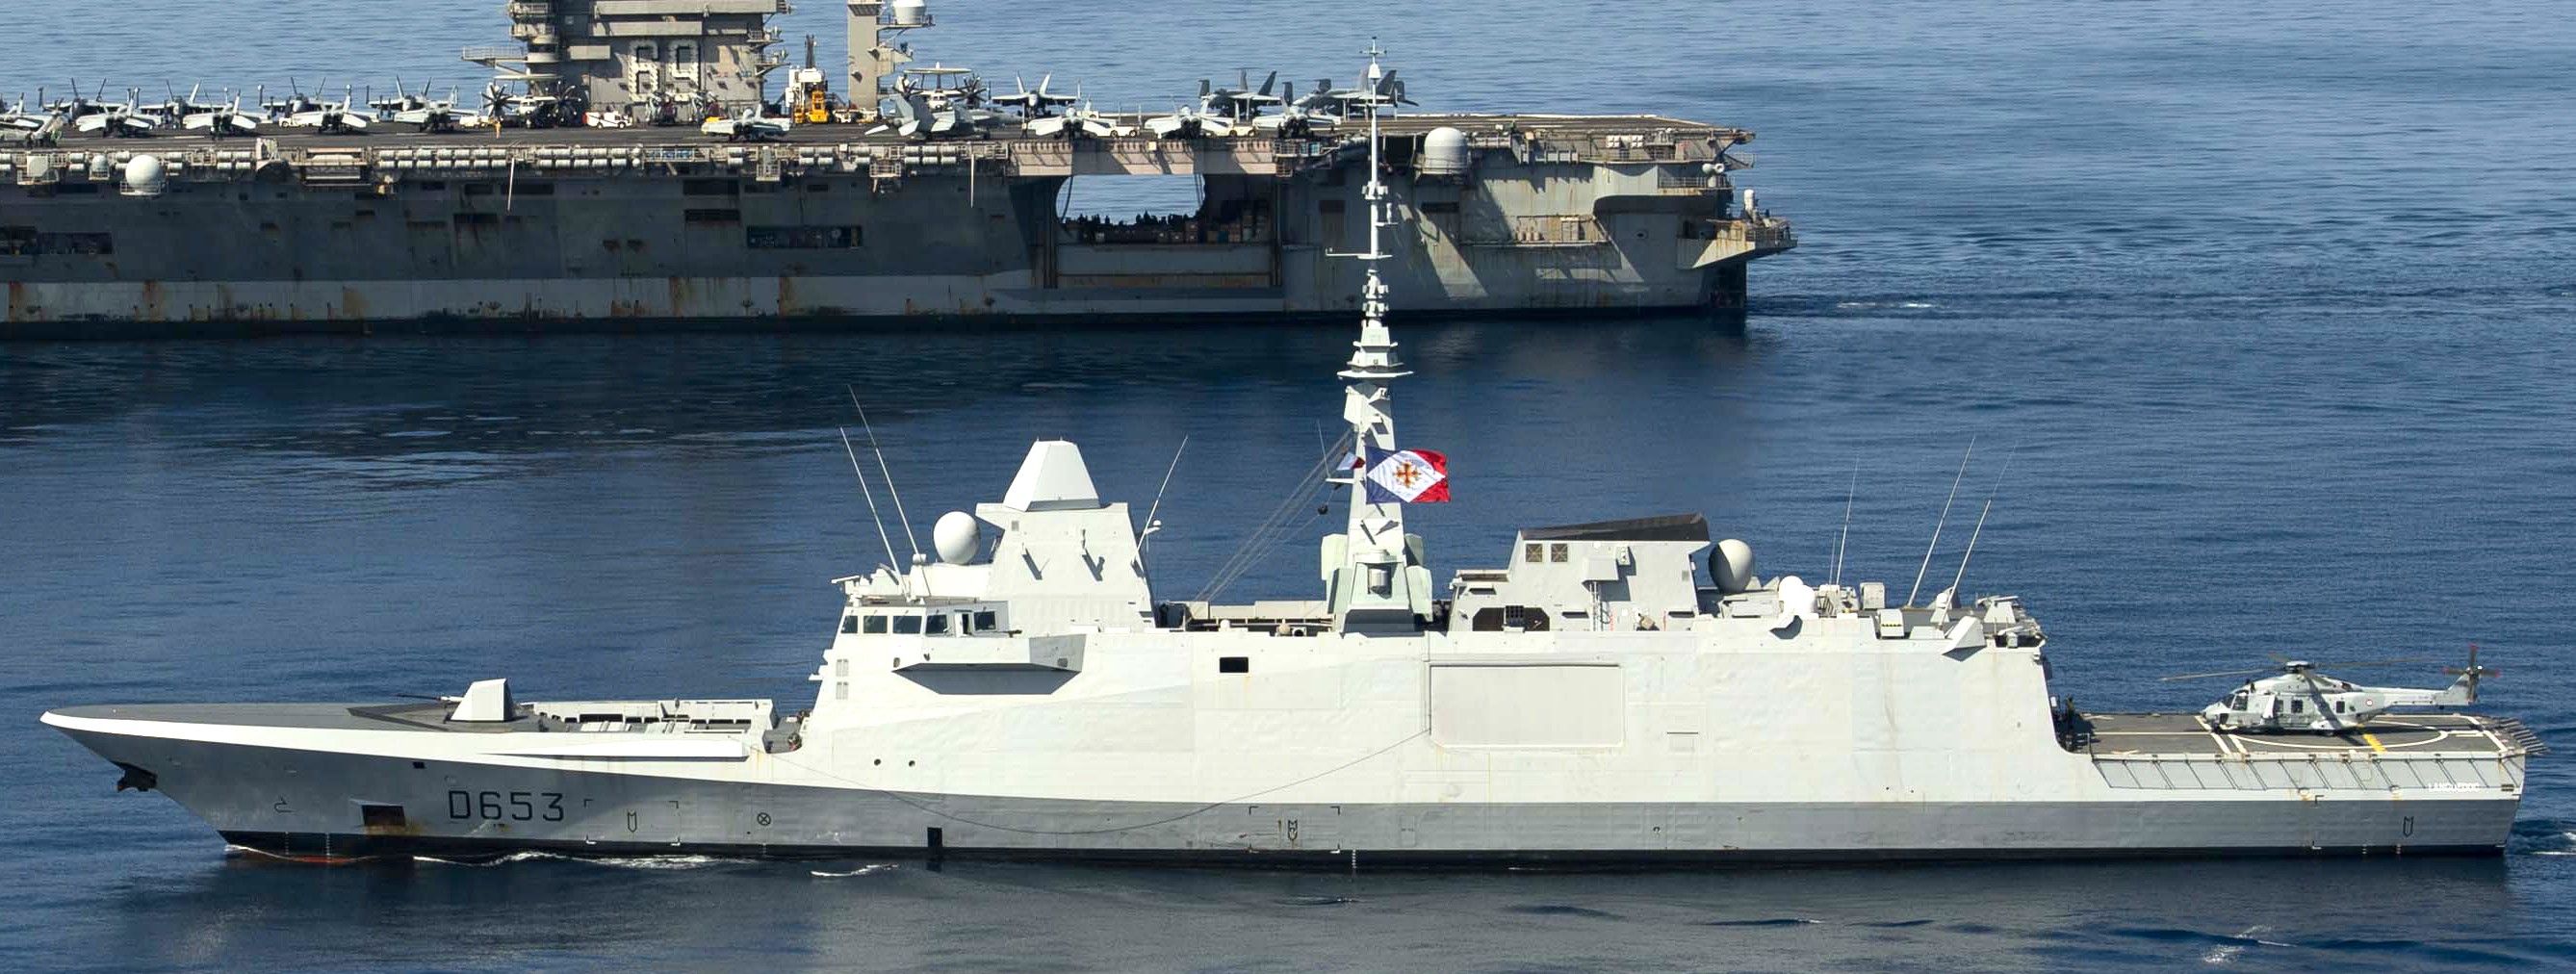 d-653 fs languedoc fremm aquitaine class frigate fregate multi purpose french navy marine nationale 21